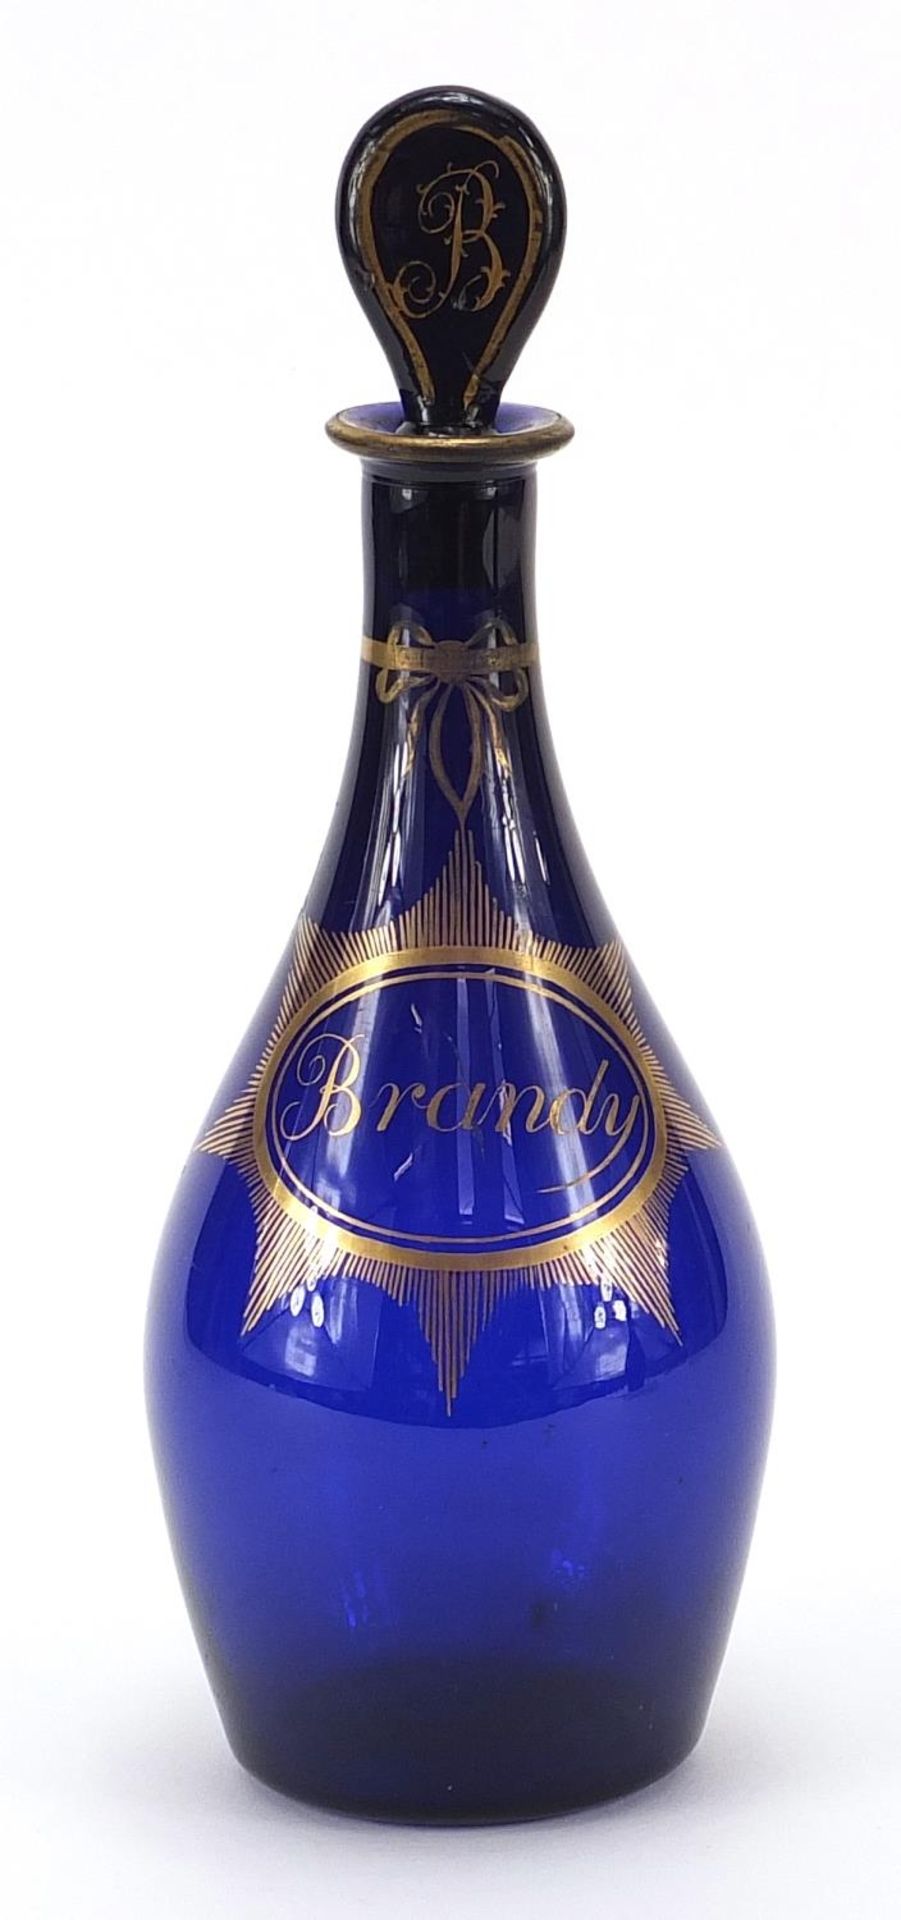 18th/19th century Bristol blue glass decanter with gilt decoration, inscribed Brandy, 24cm high